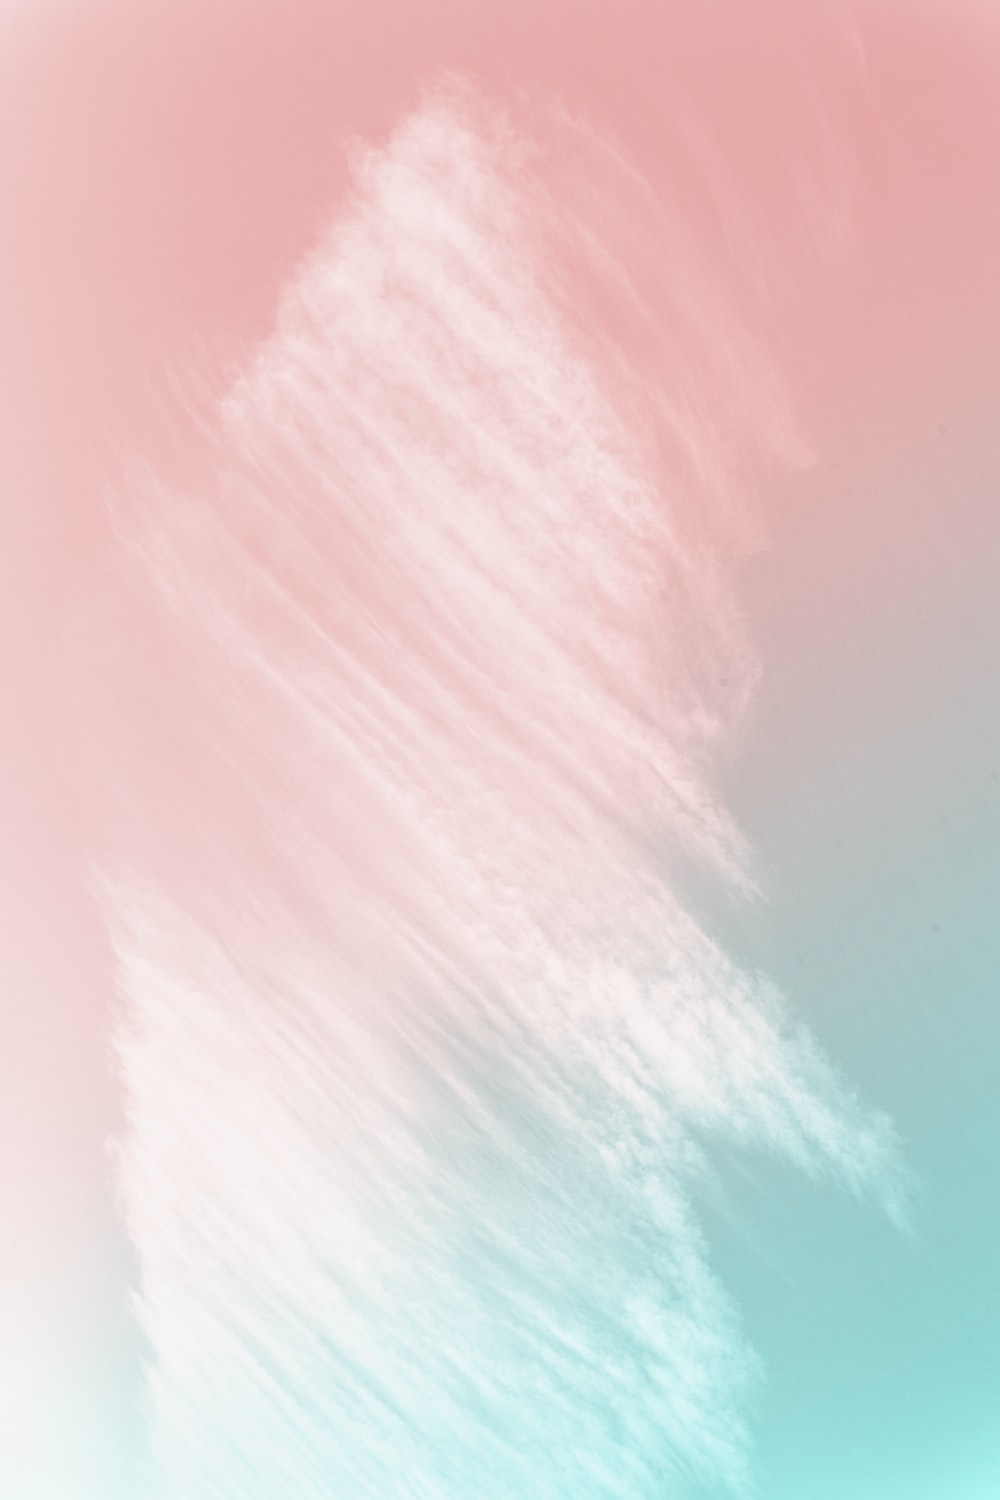 Minimalist Pastel Picture. Download Free Image